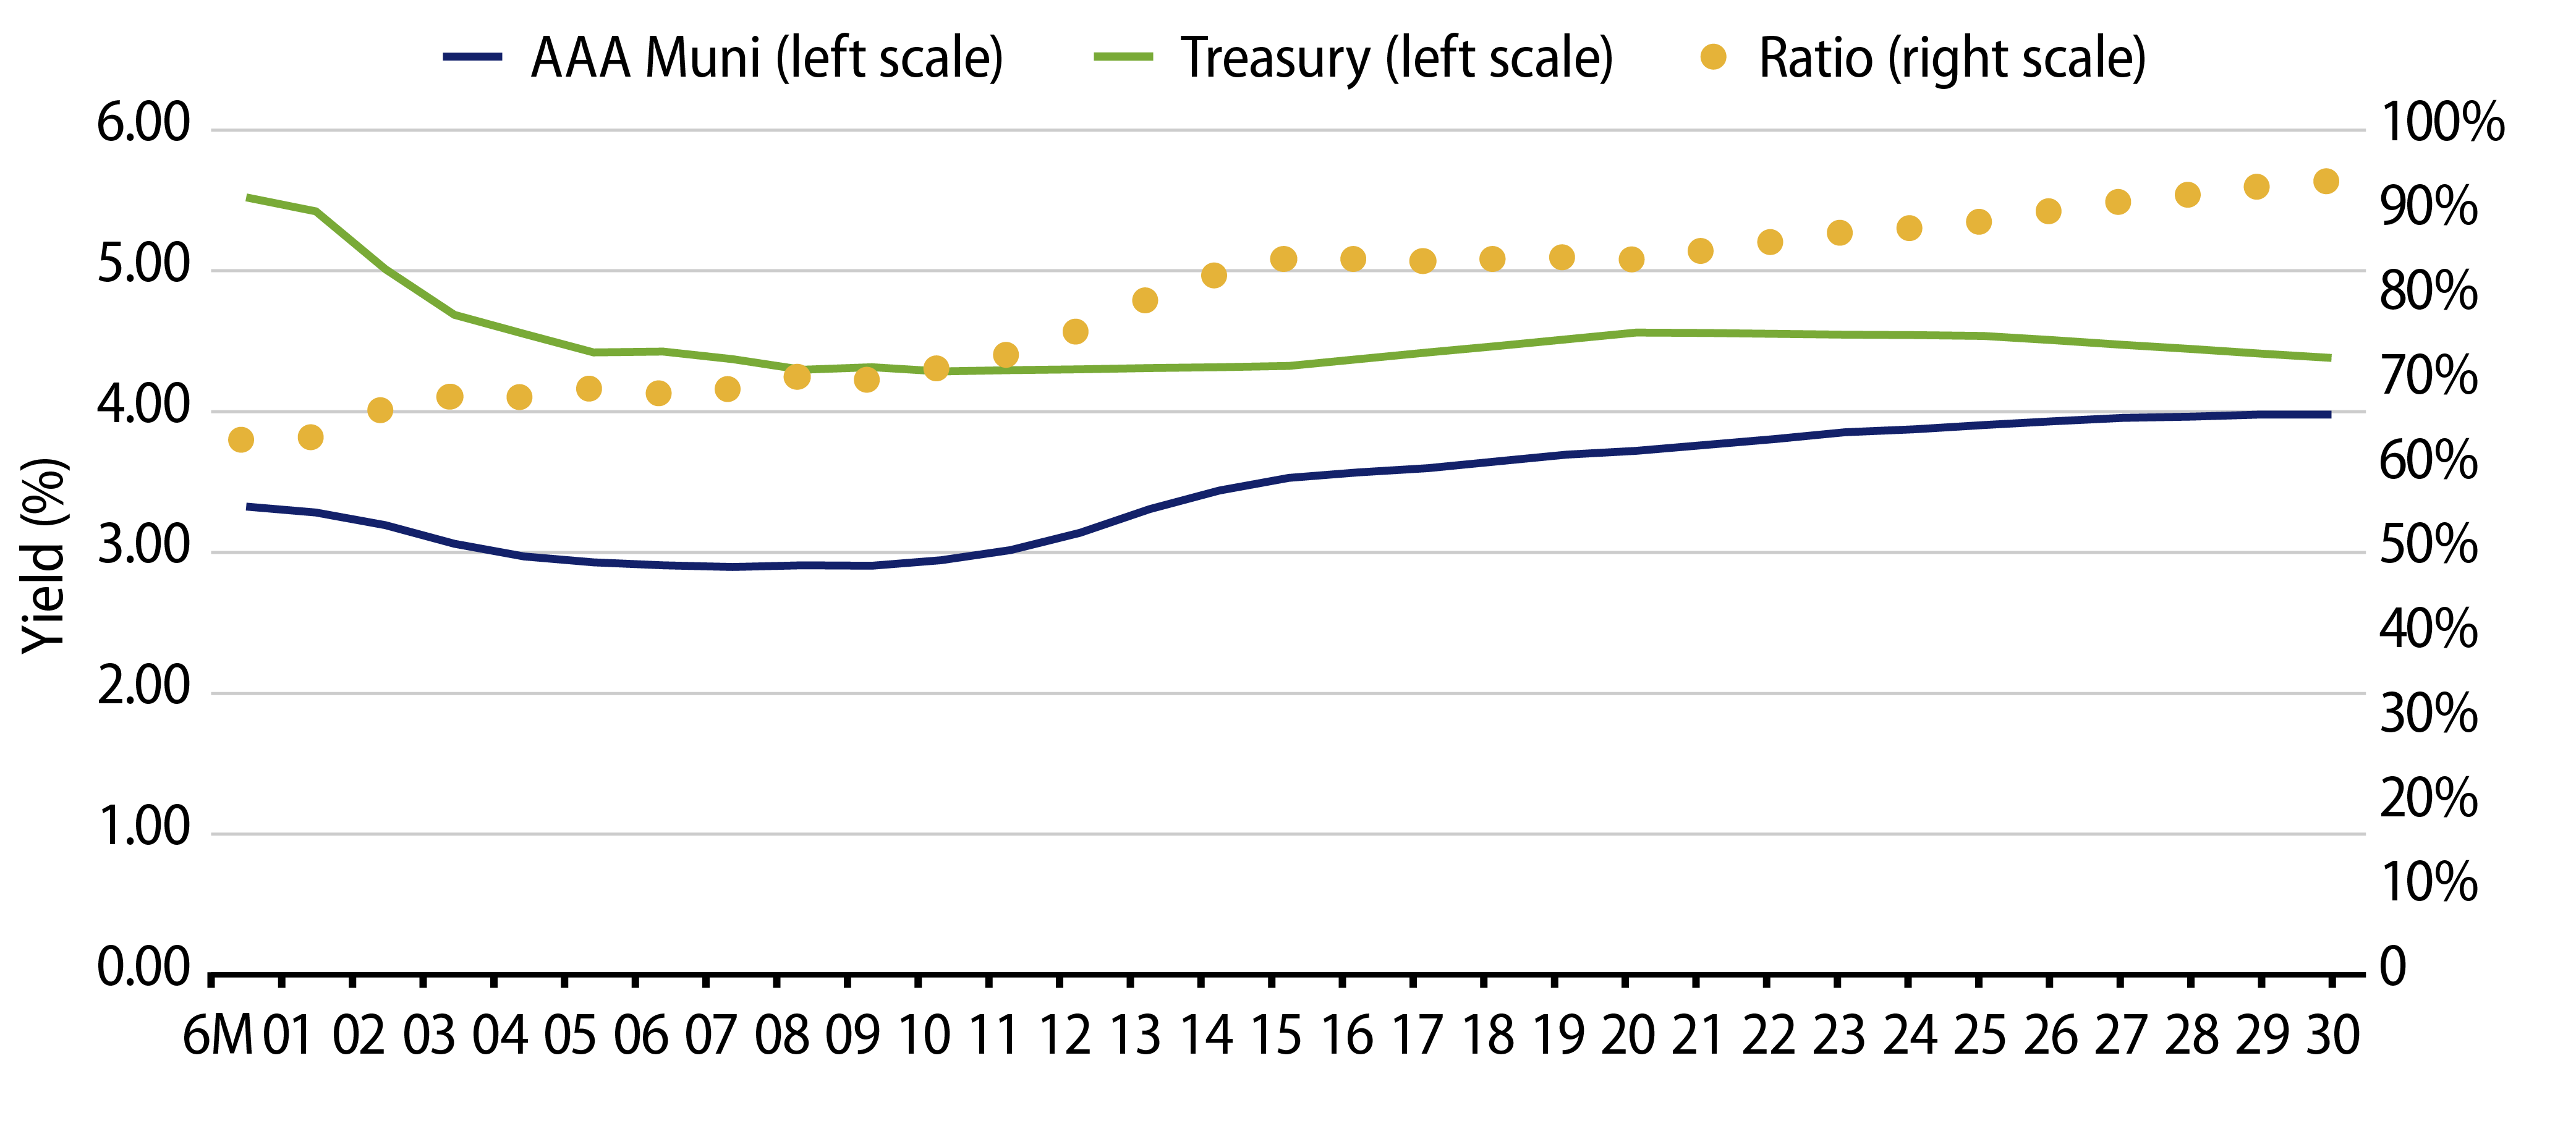 AAA Municipal Yield Curve vs. Treasury Yield Curve